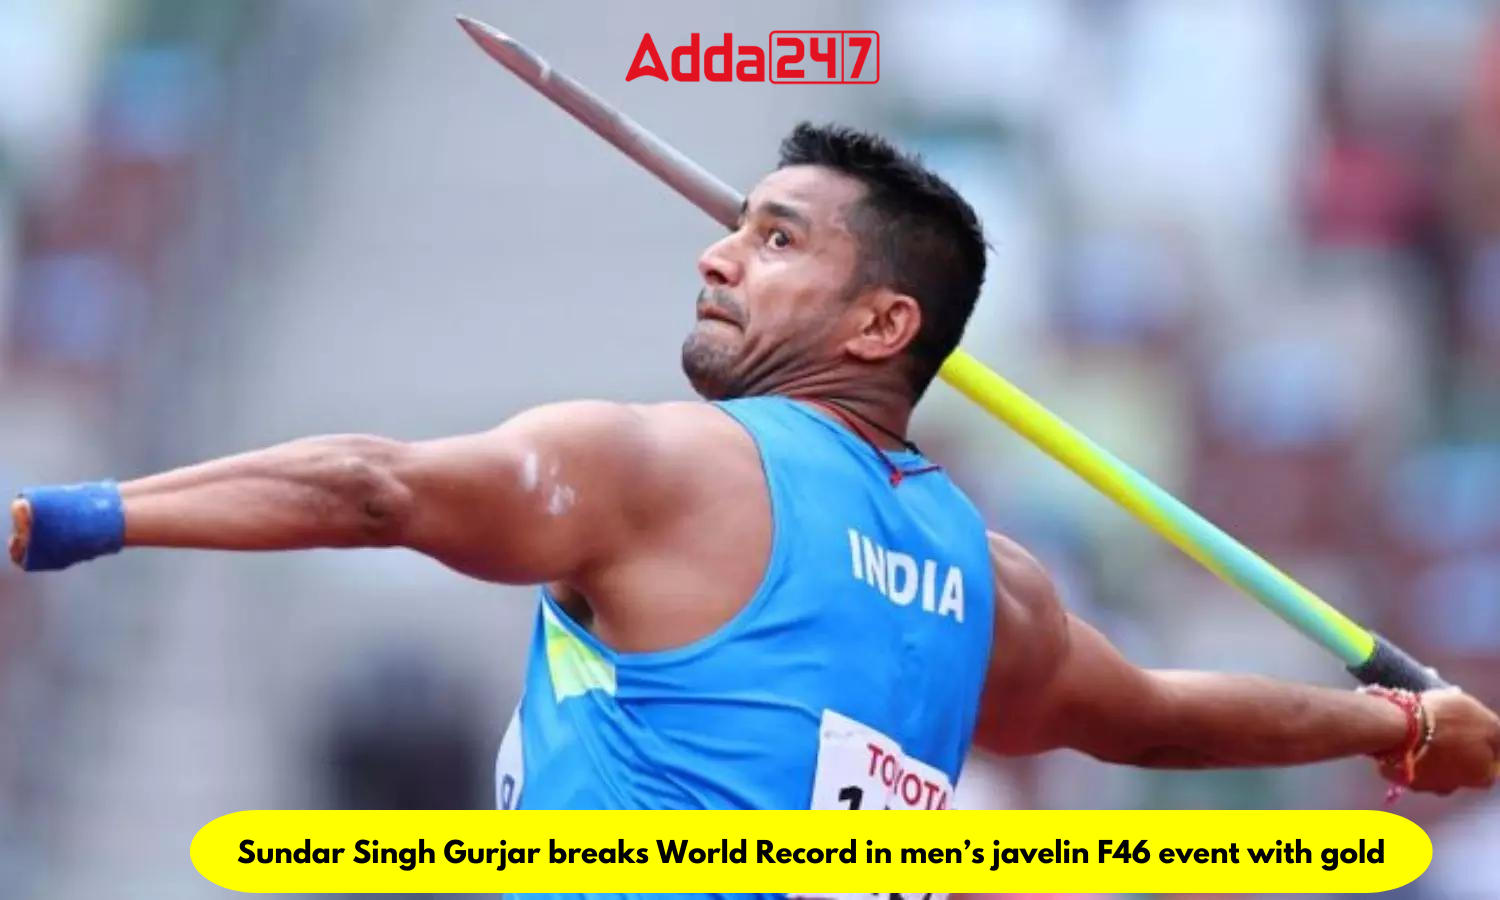 Sundar Singh Gurjar breaks World Record in men’s javelin F46 event with gold